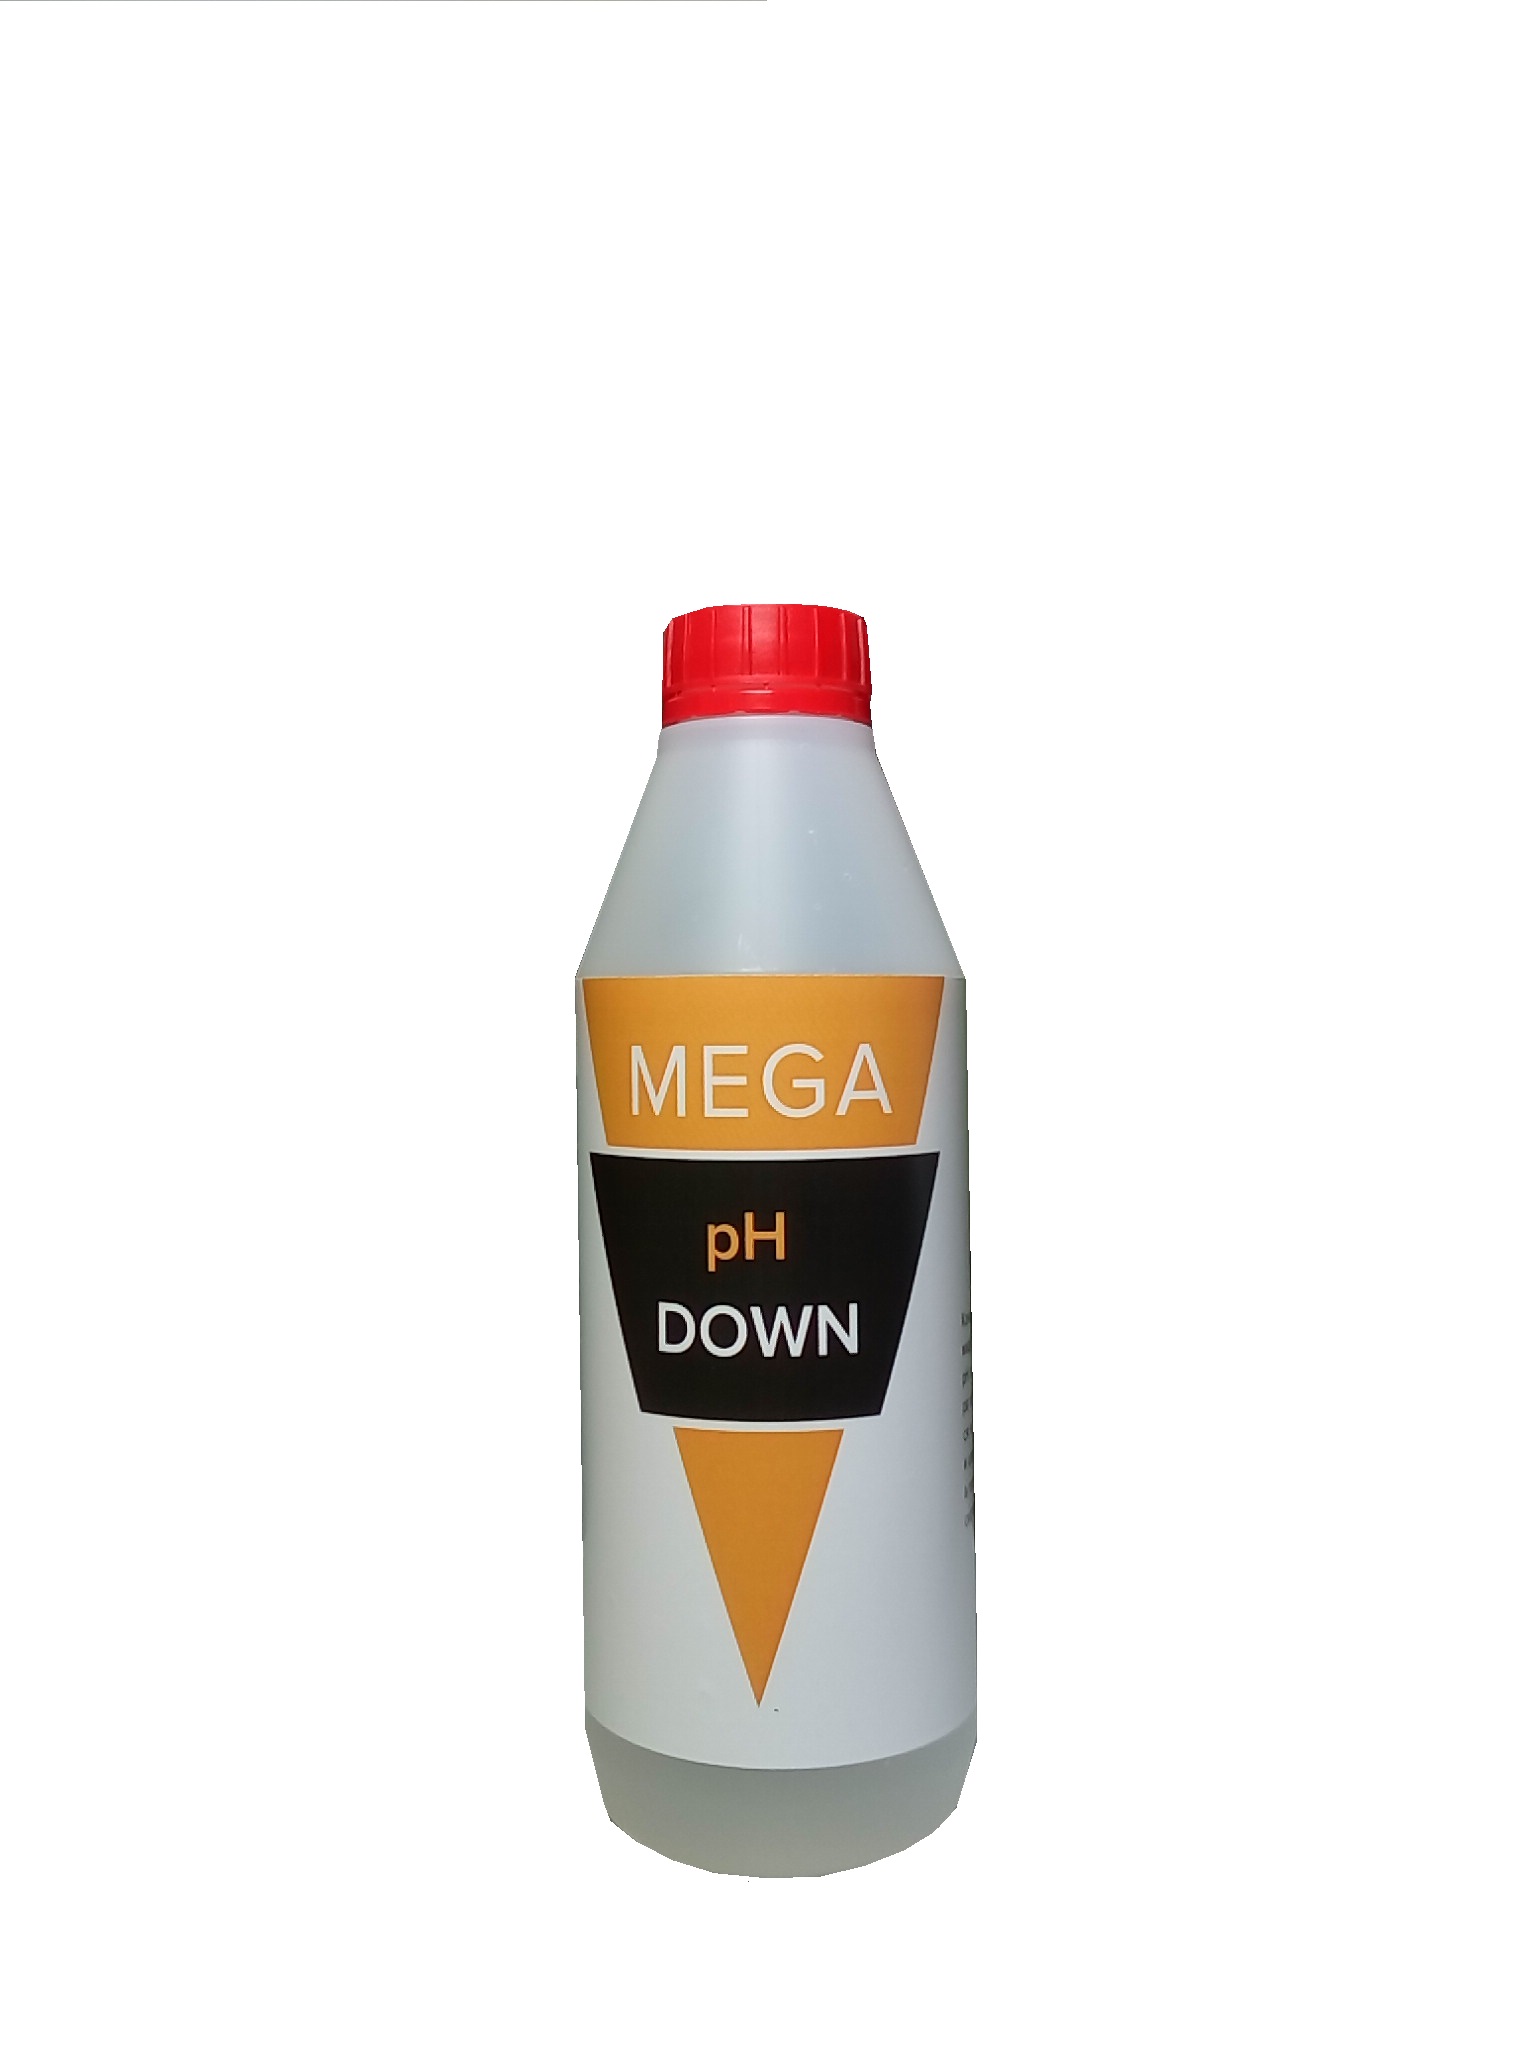 Mega Ph Down 100 ml понизитель РН 100 мл